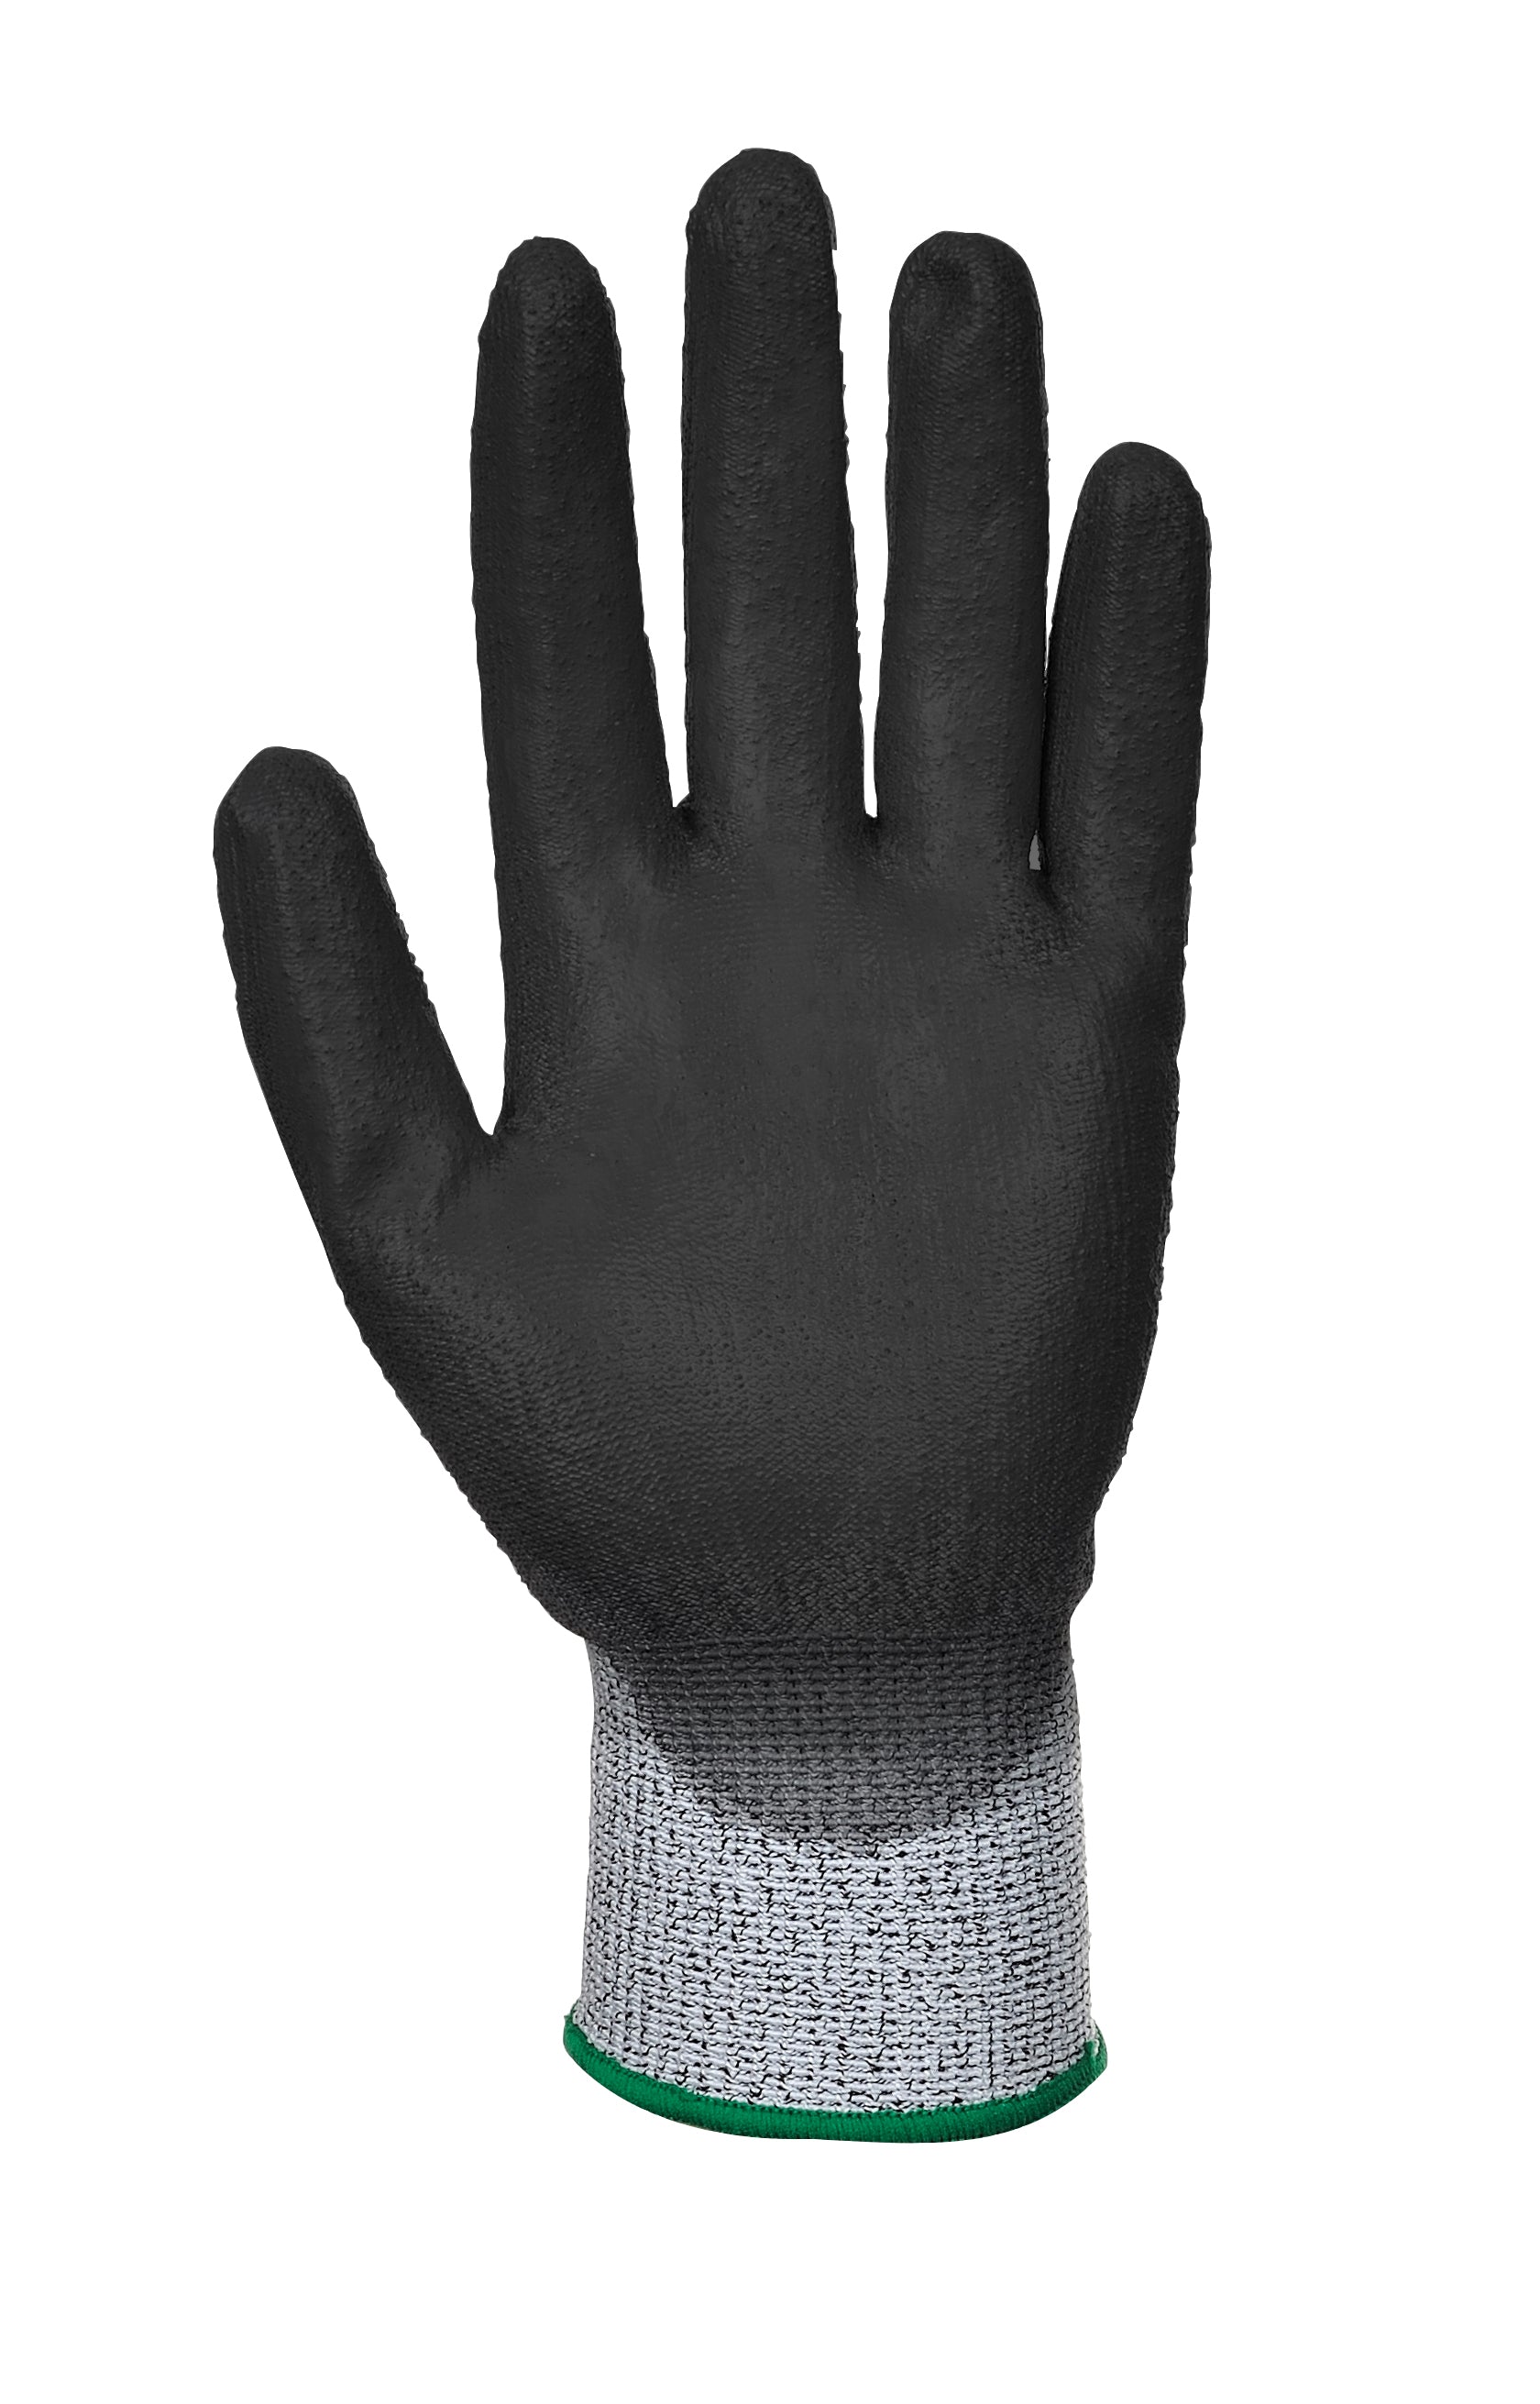 VHR Advanced Cut Glove Grey/Black - A665 Palm 